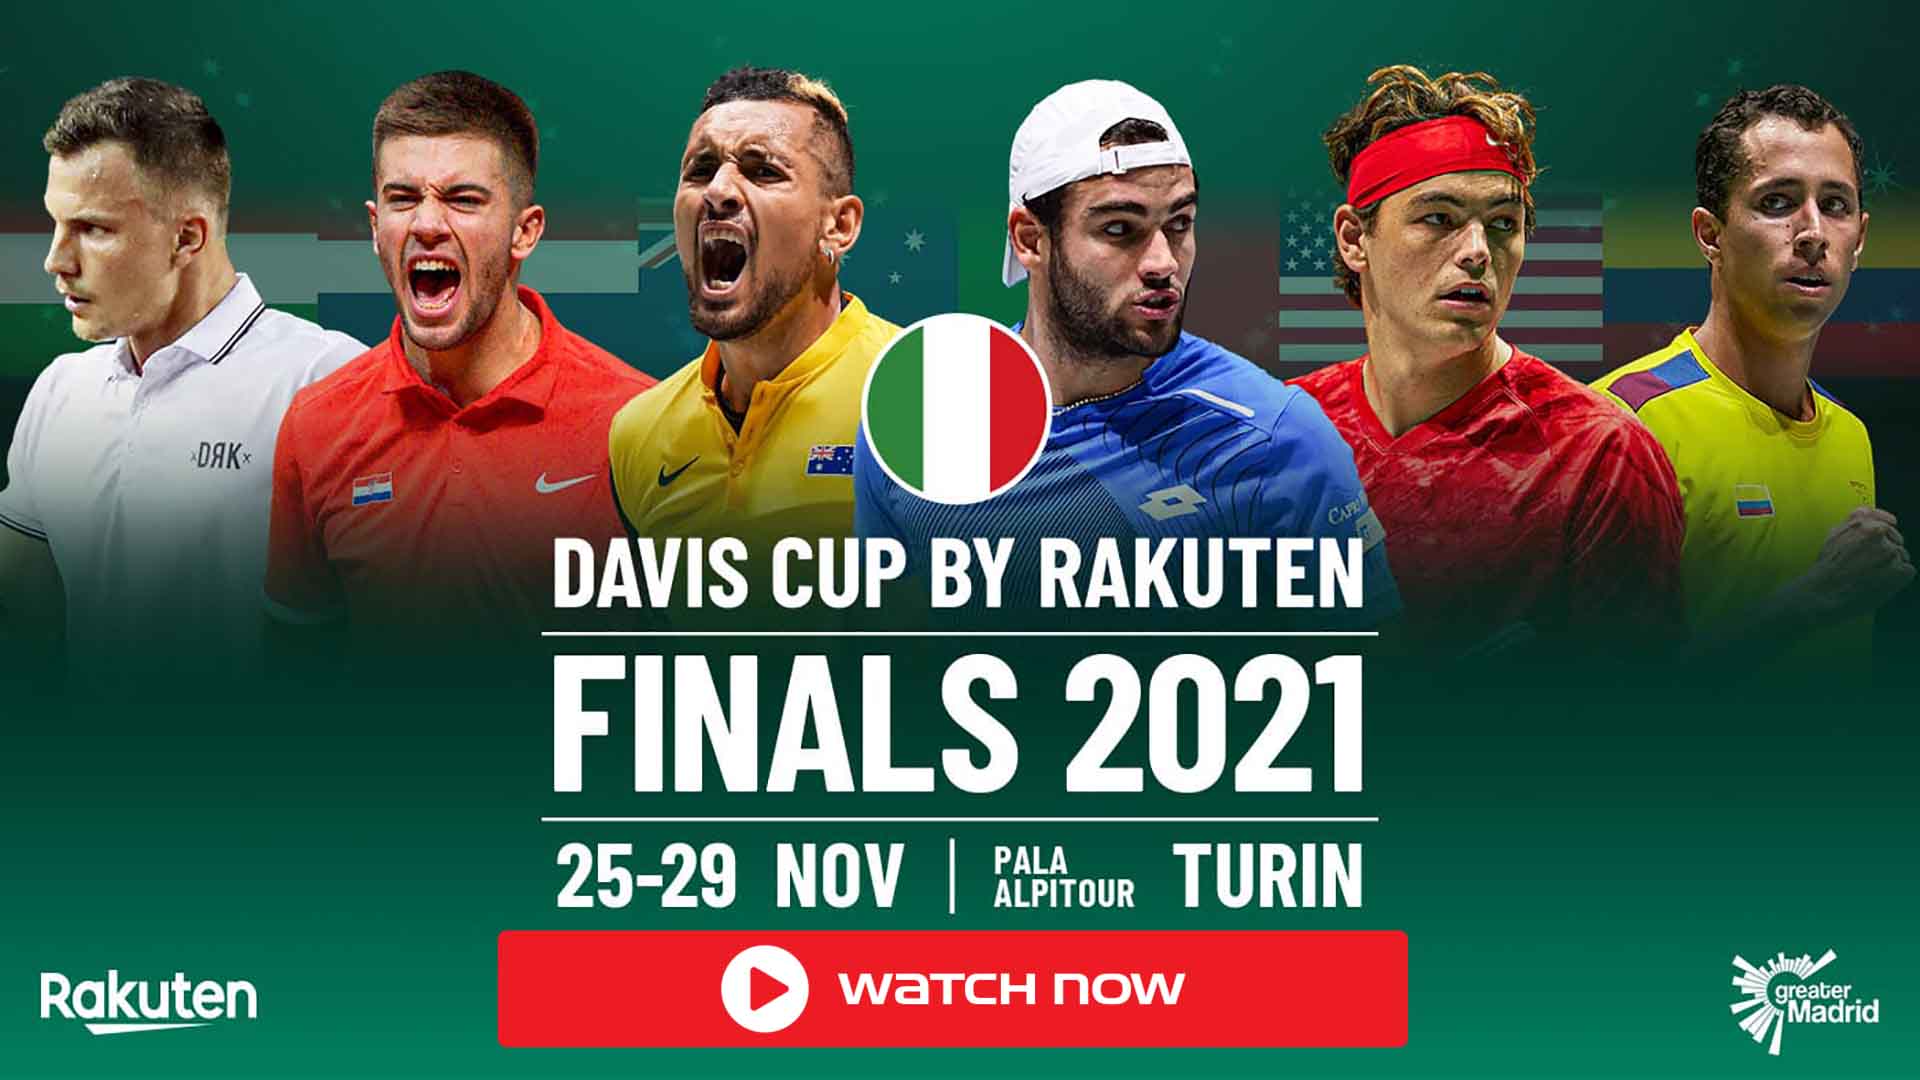 Davis Cup Finals 2021 Live Stream, TV Channels, Schedule, Format